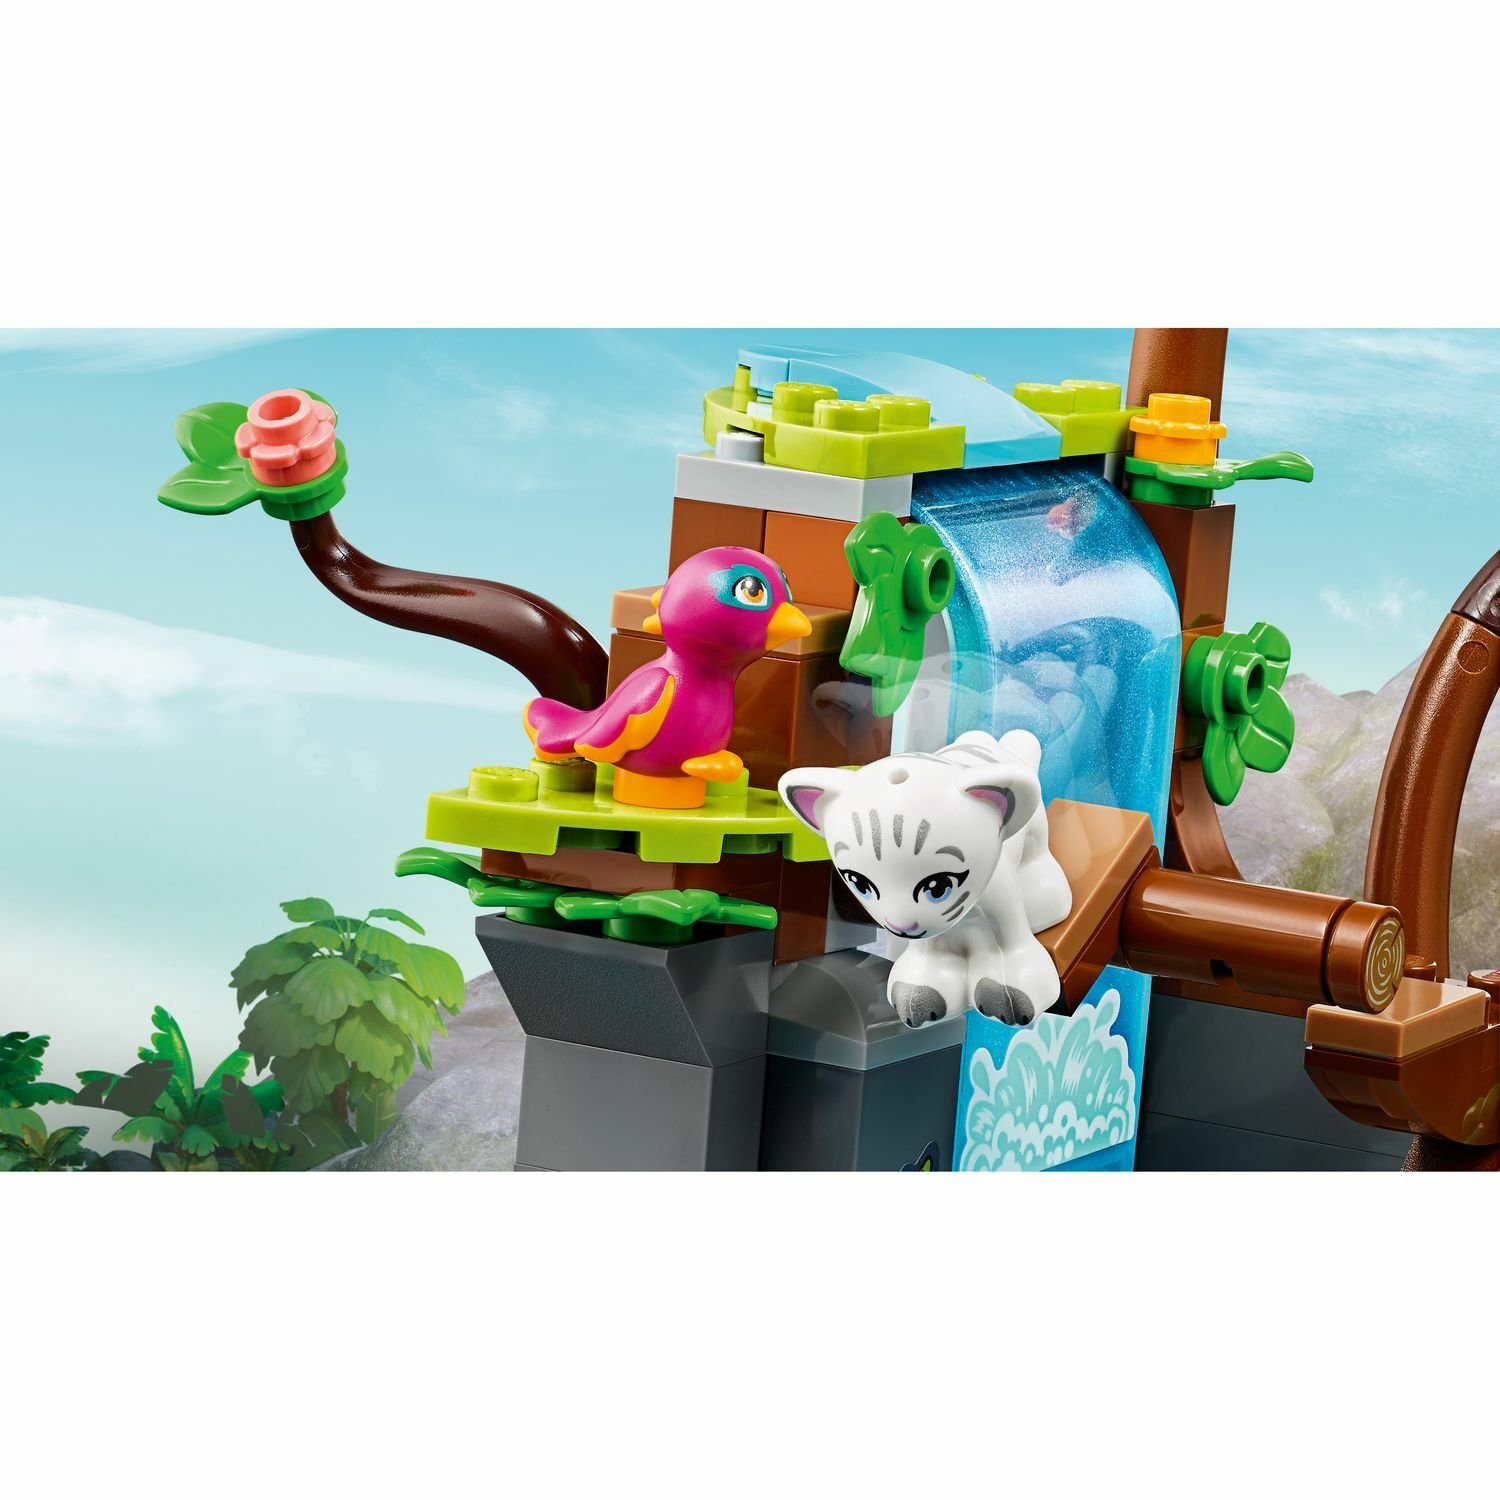 Lego Friends 41423 Джунгли: спасение тигра на воздушном шаре